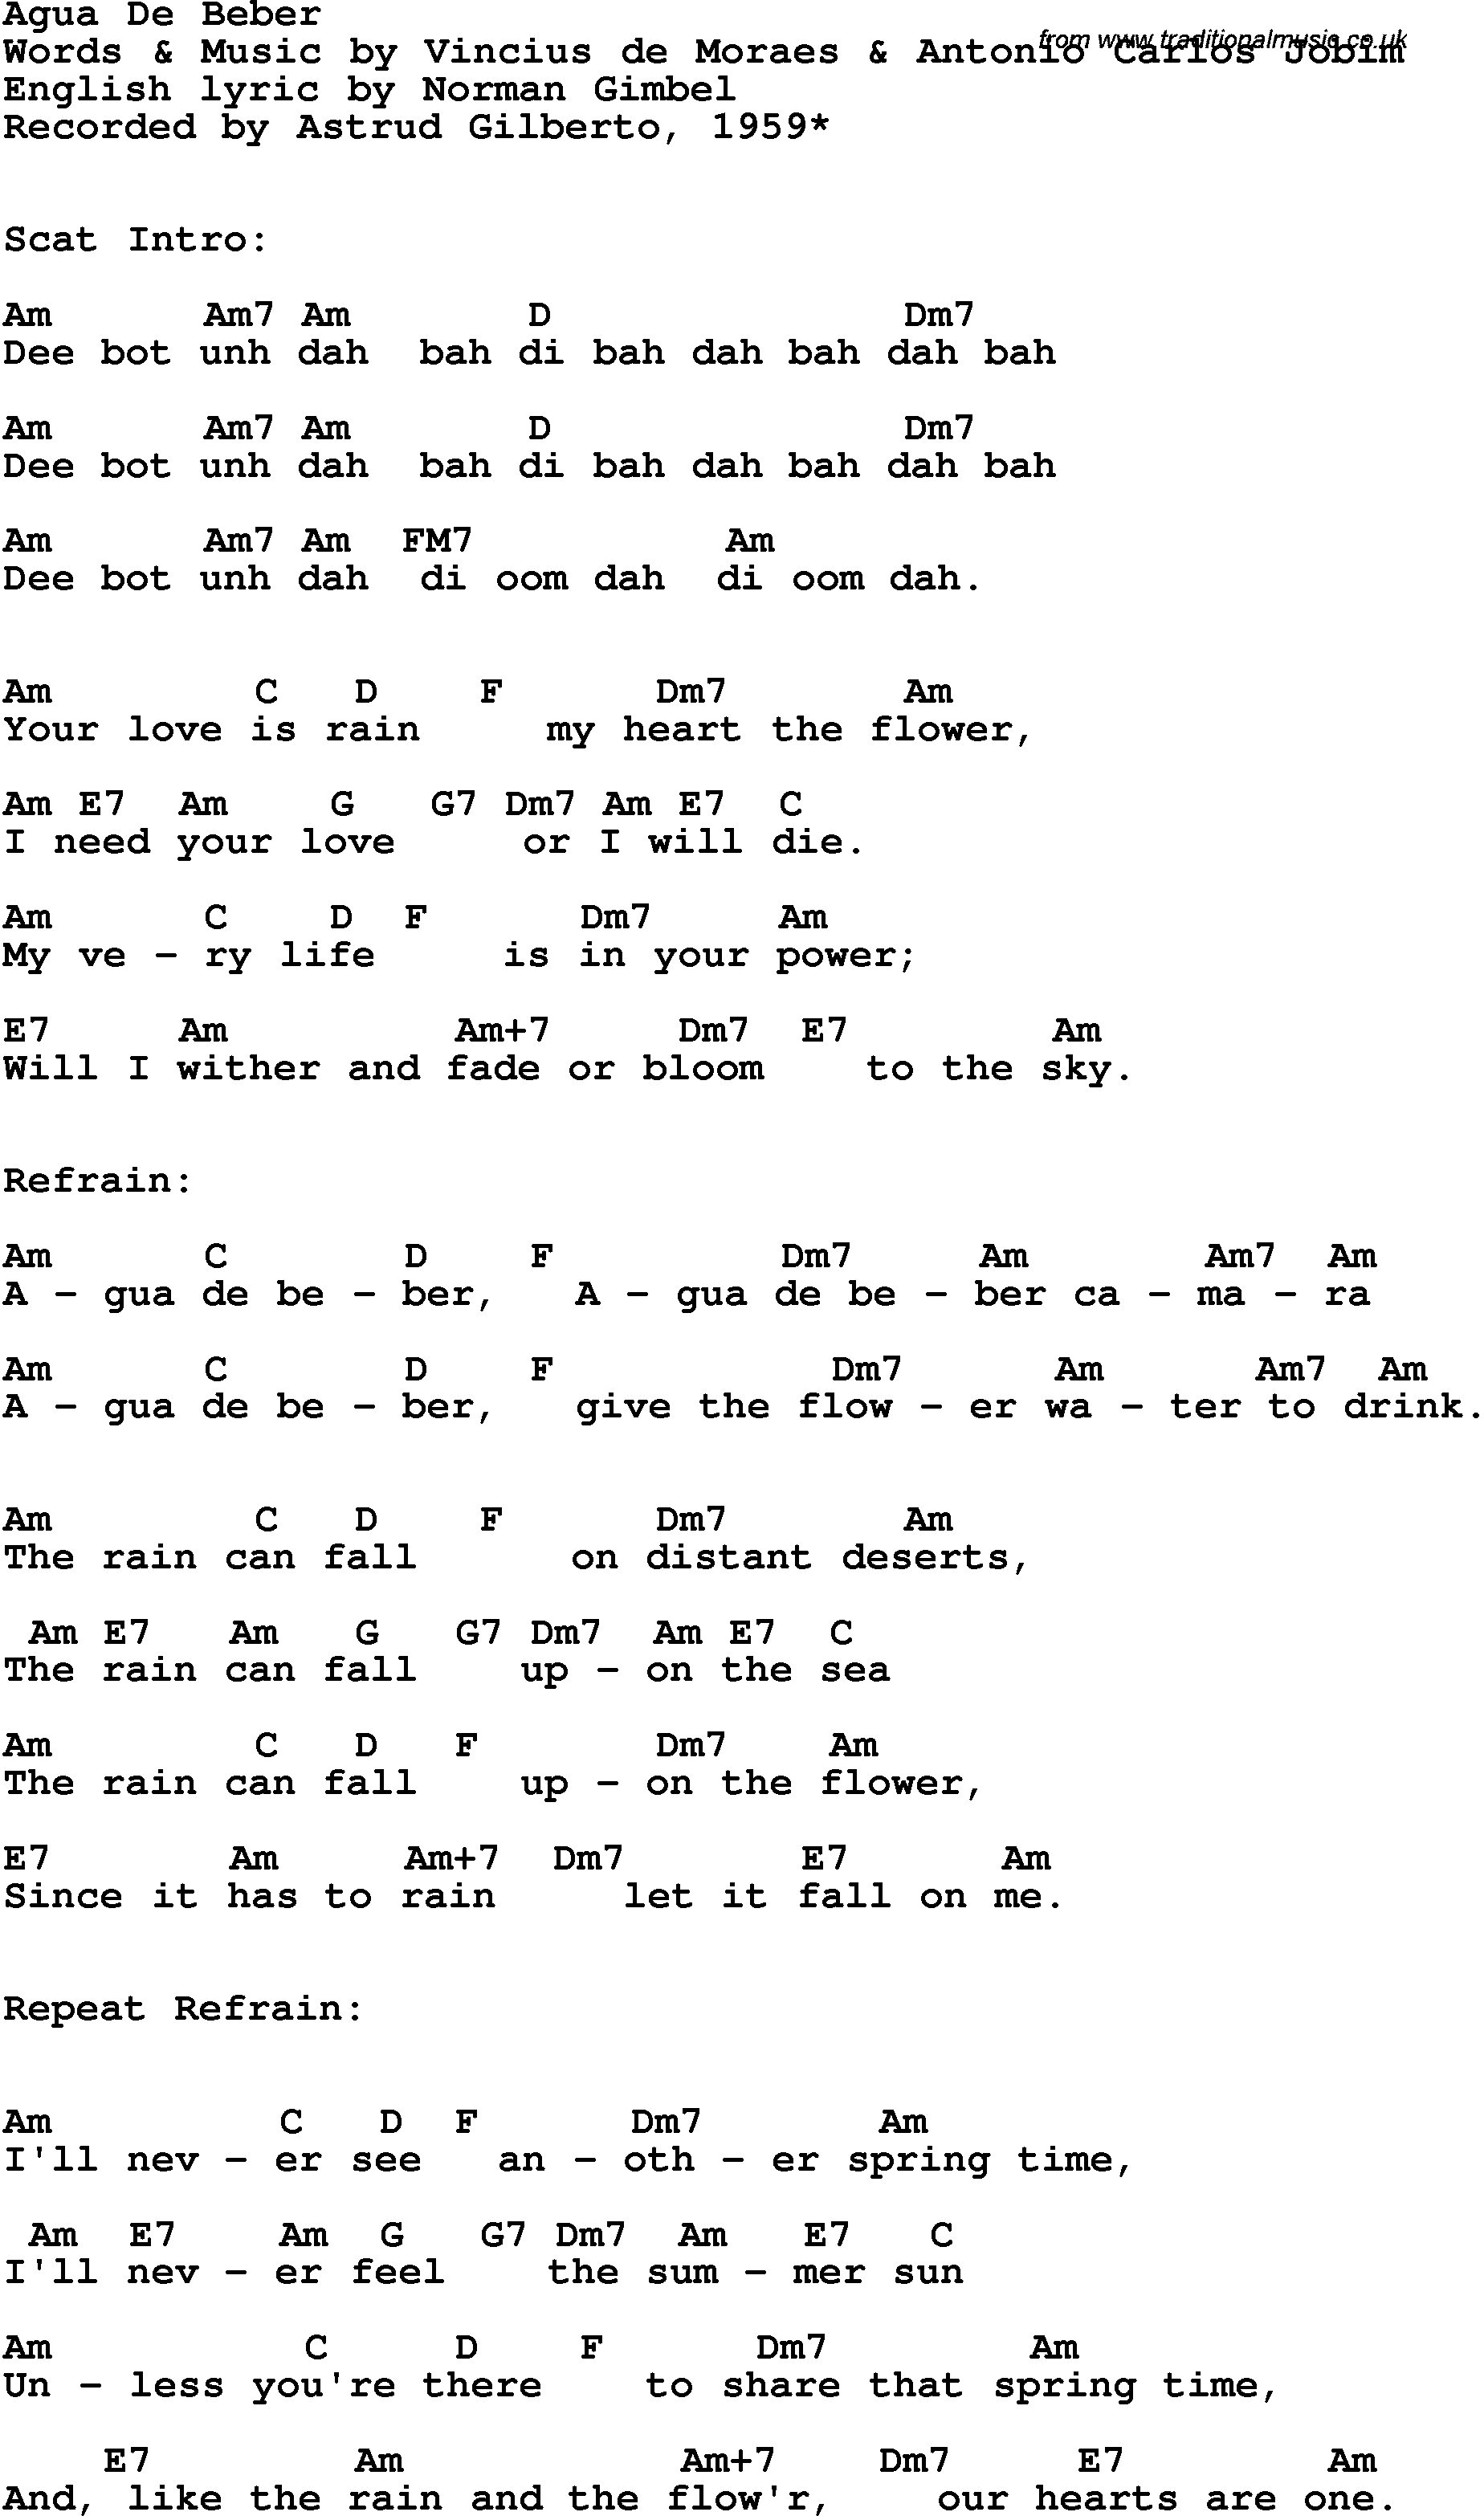 Song Lyrics with guitar chords for Agua De Beber - Astrud Gilberto, 1959